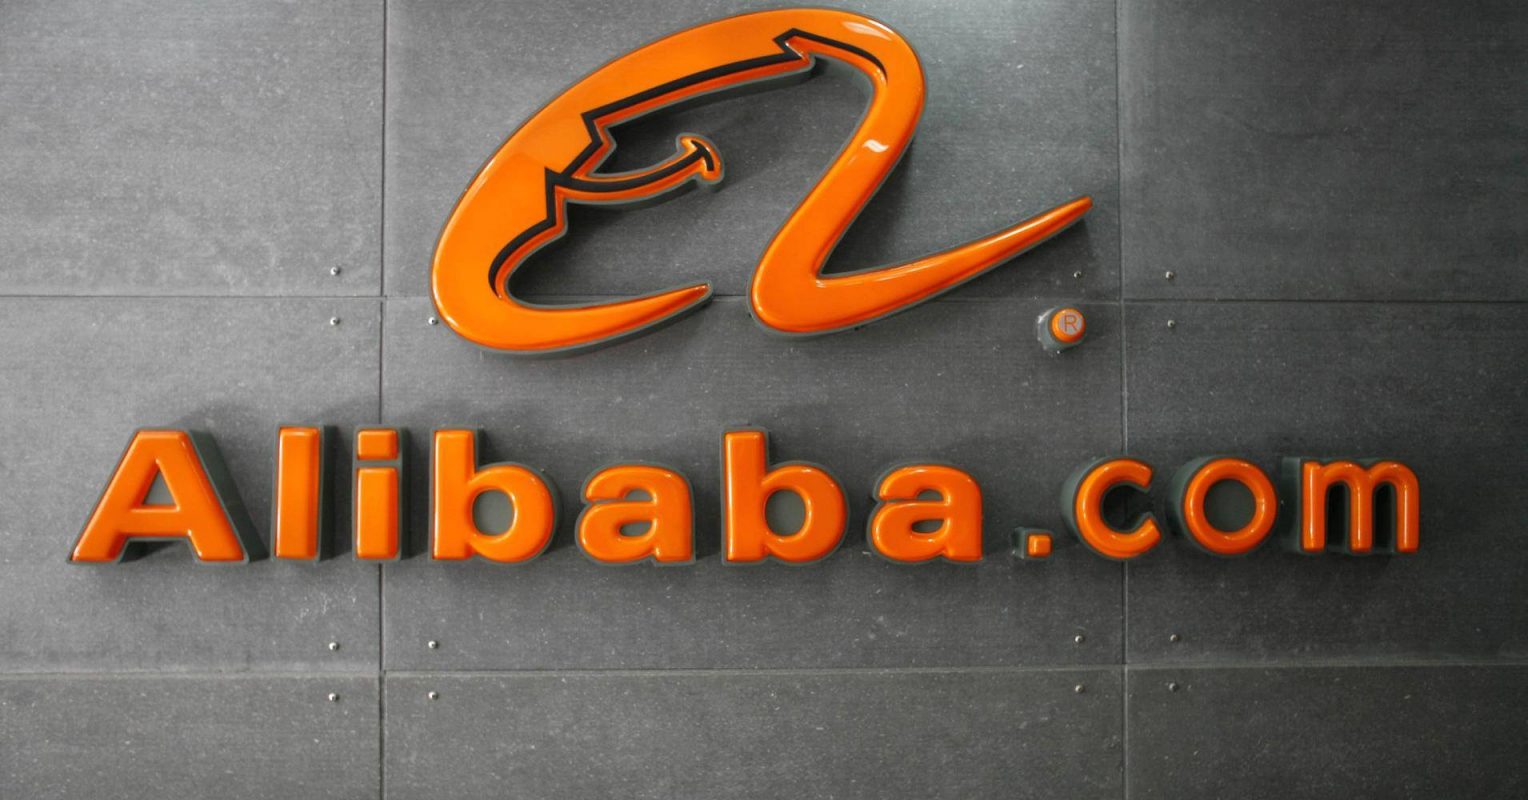 Alibaba same-sex relationship China taboo Tmall ad